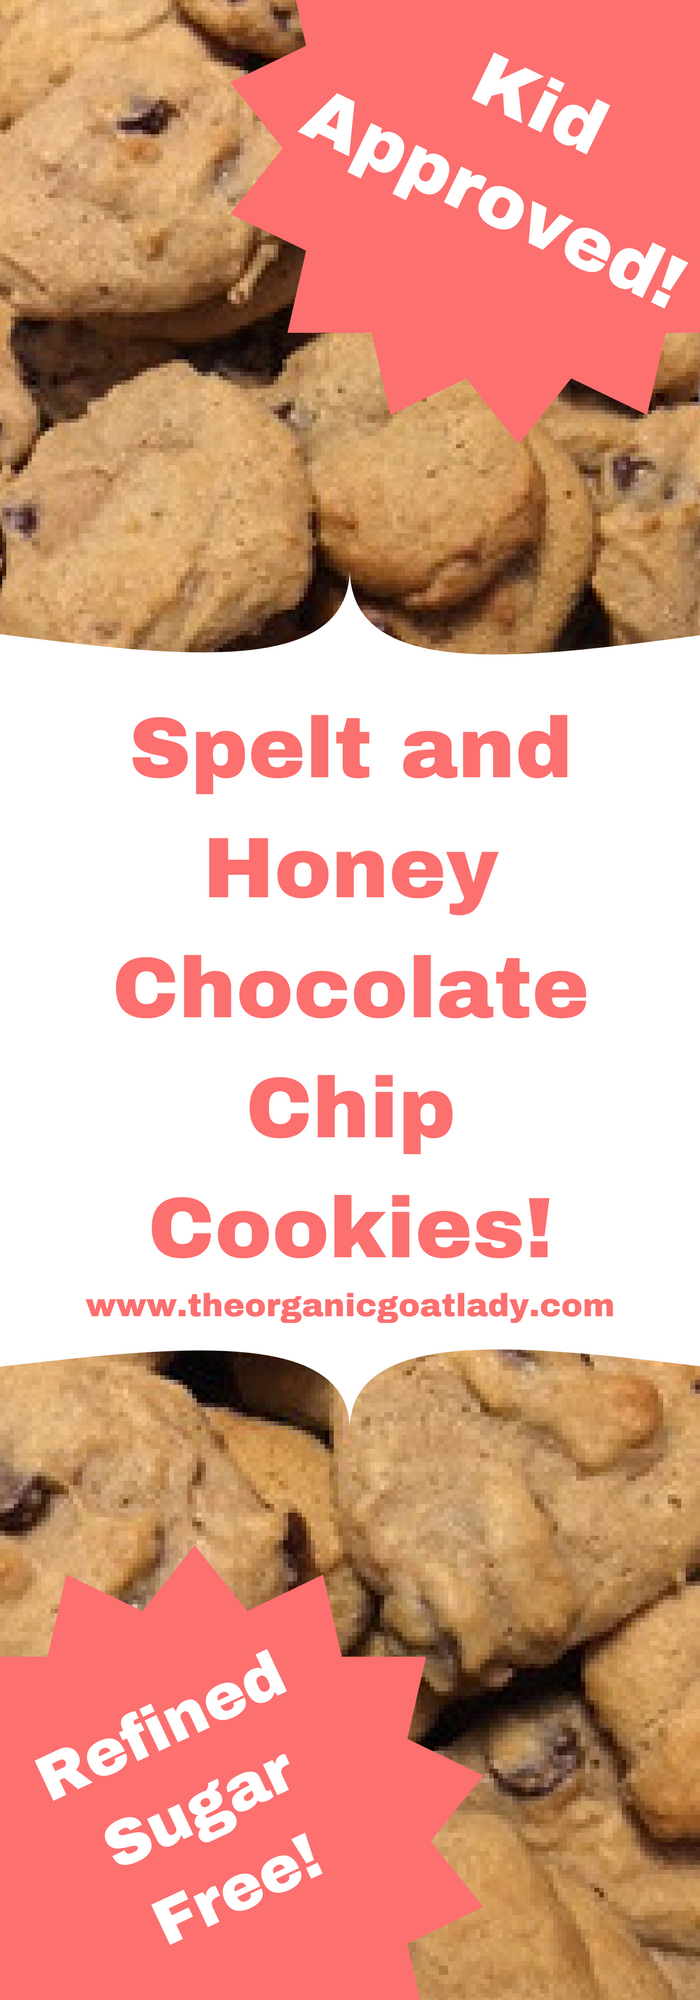 Spelt and Honey Chocolate Chip Cookies!